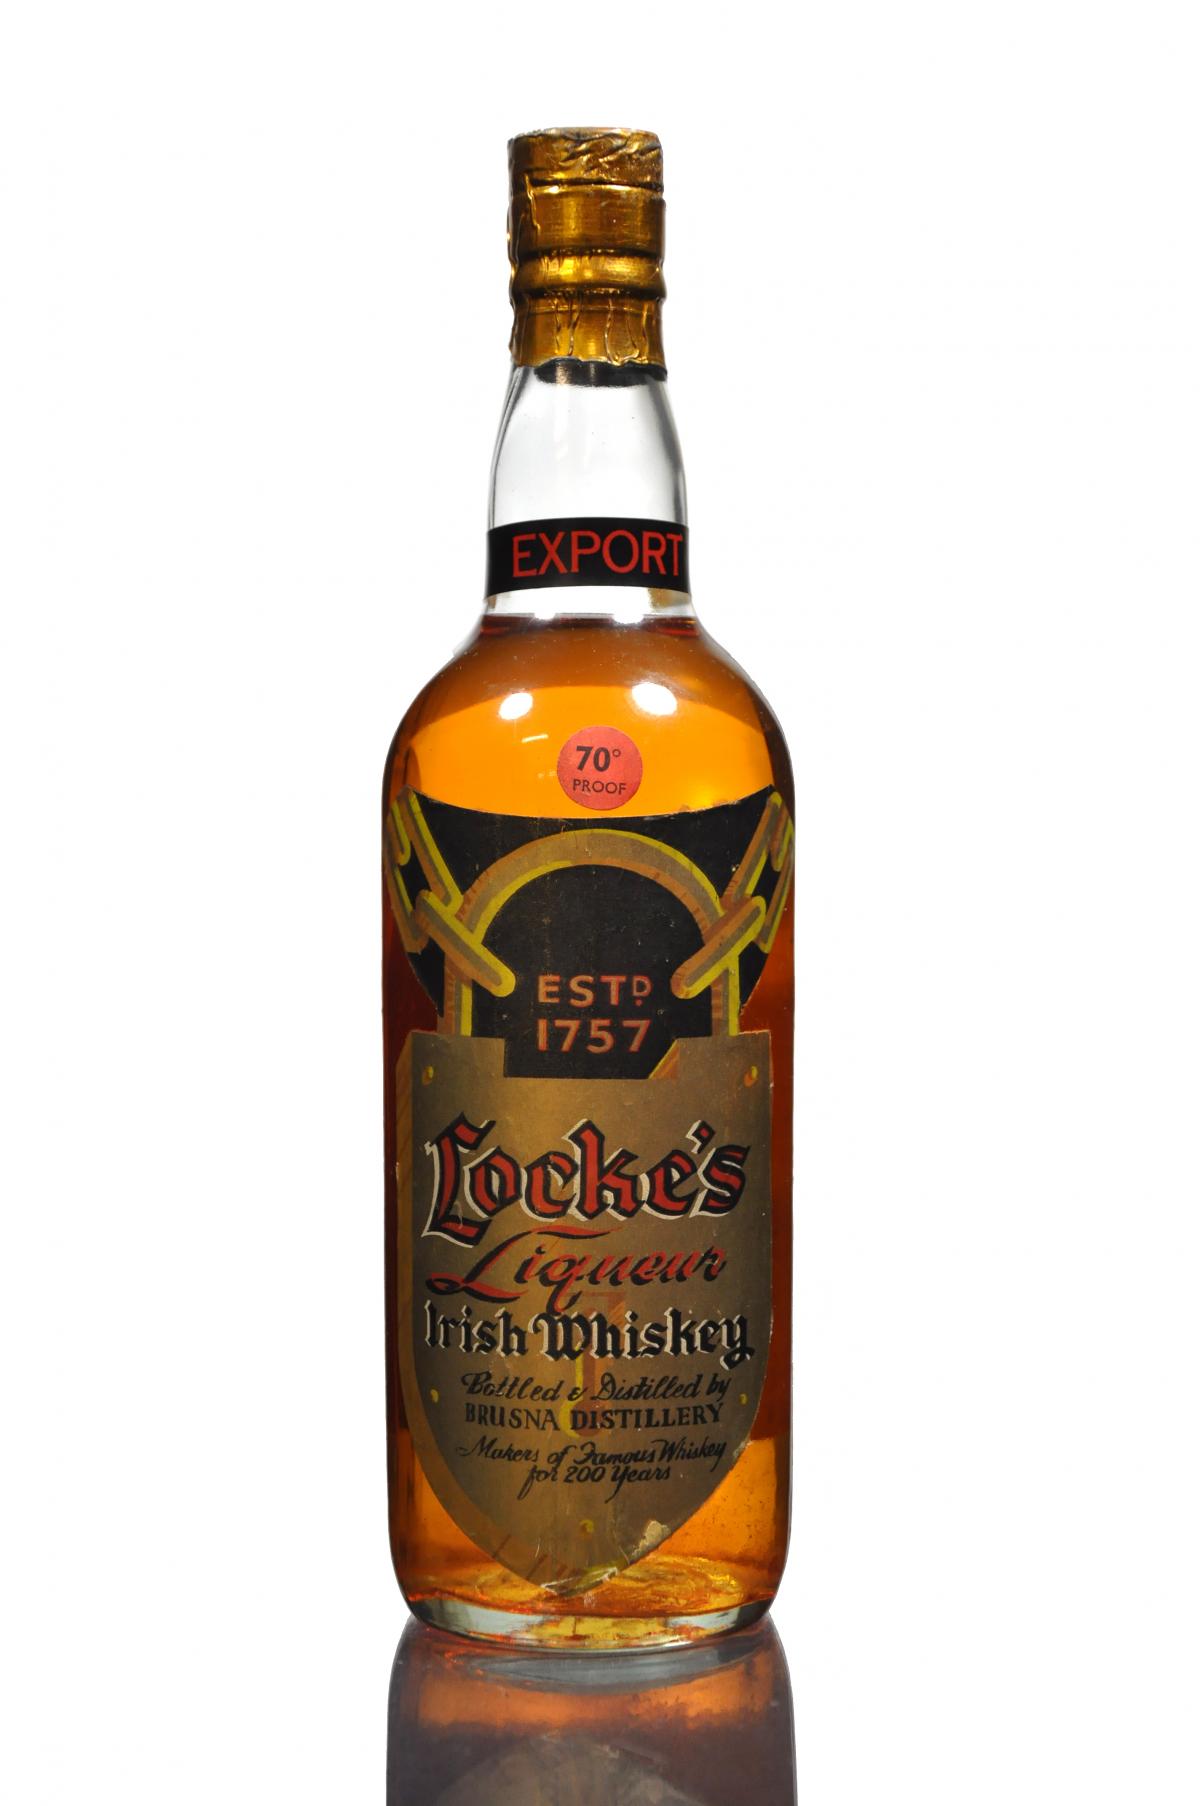 Lockes Liqueur Irish Whiskey - Brusna Distillery - Late 1950s